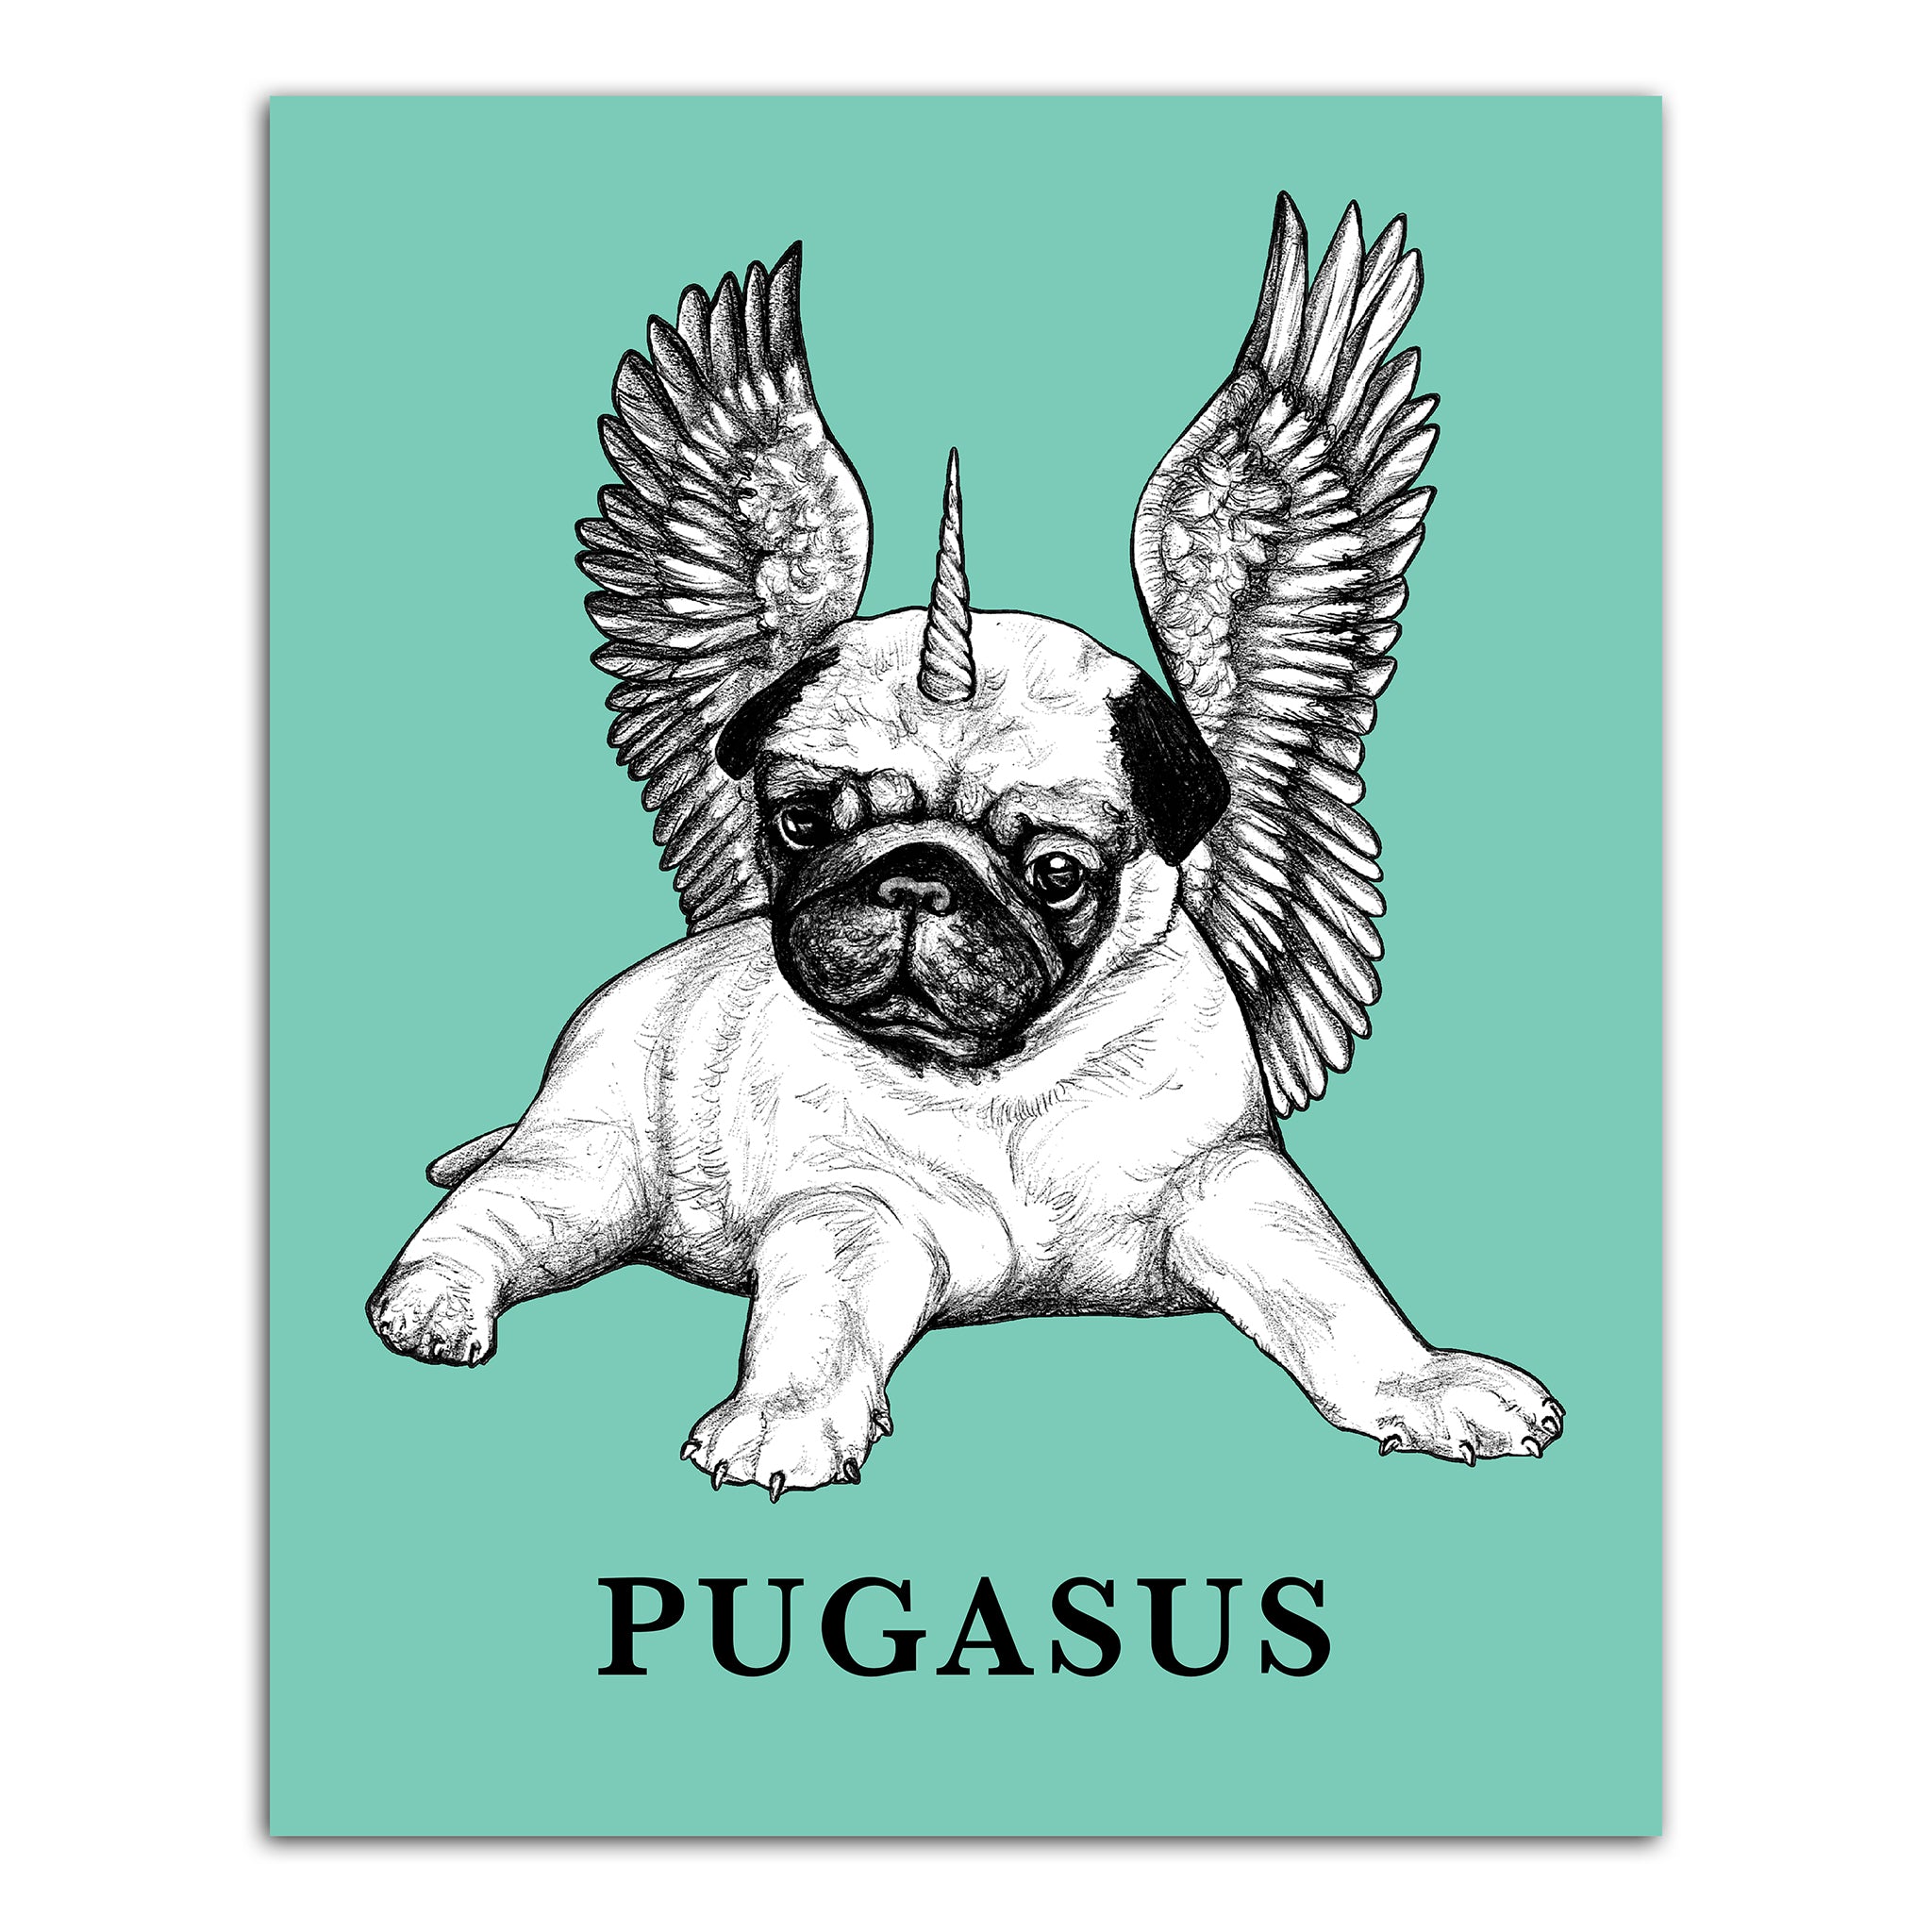 Pugasus | Pug + Pegasus Hybrid Animal | 8x10" Color Print